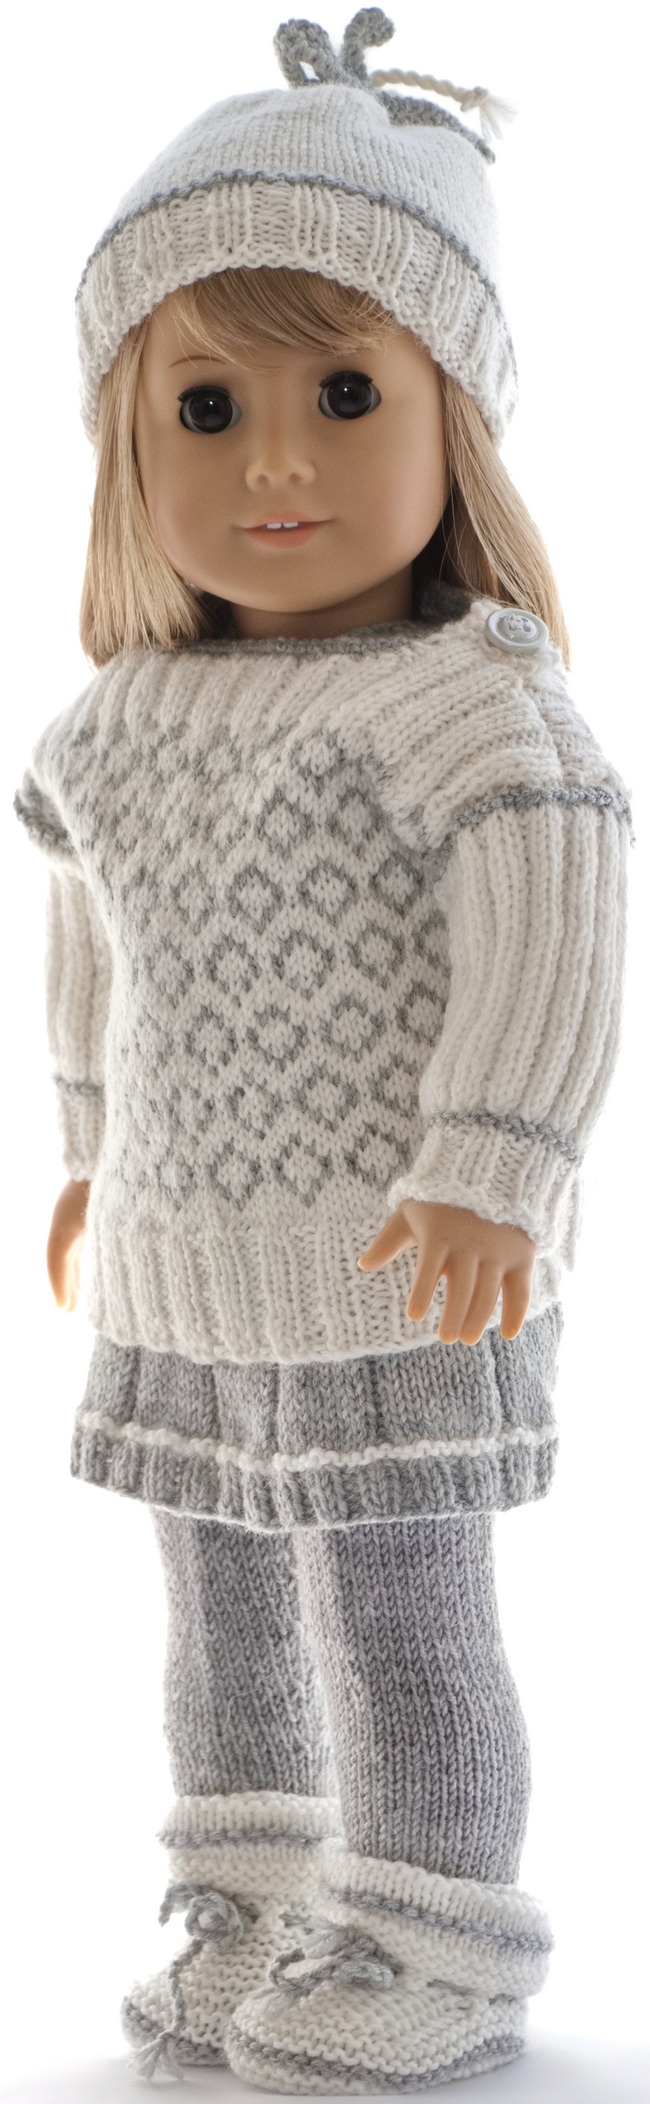 15-0244d-18-inch-doll-sweater-knitting-patterns.jpg